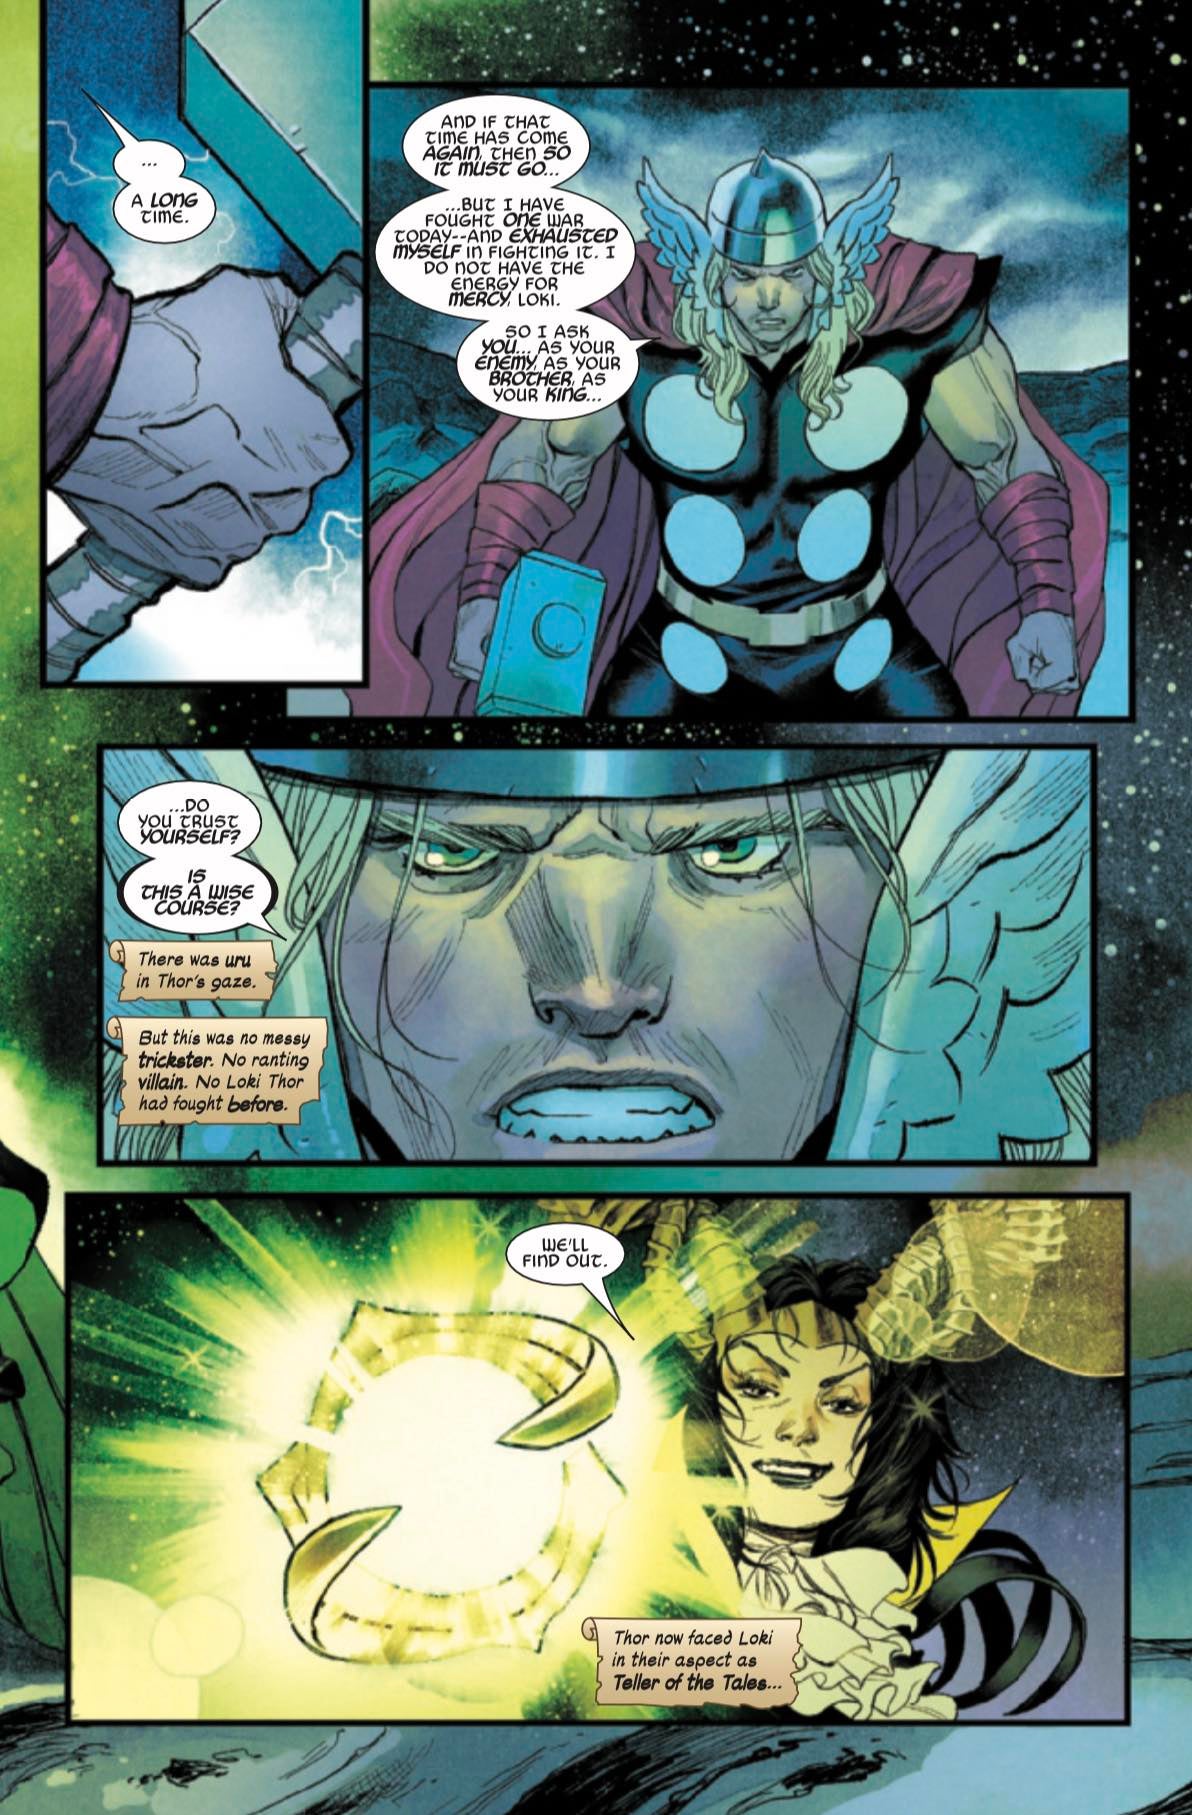 Immortal Thor #2 interior page